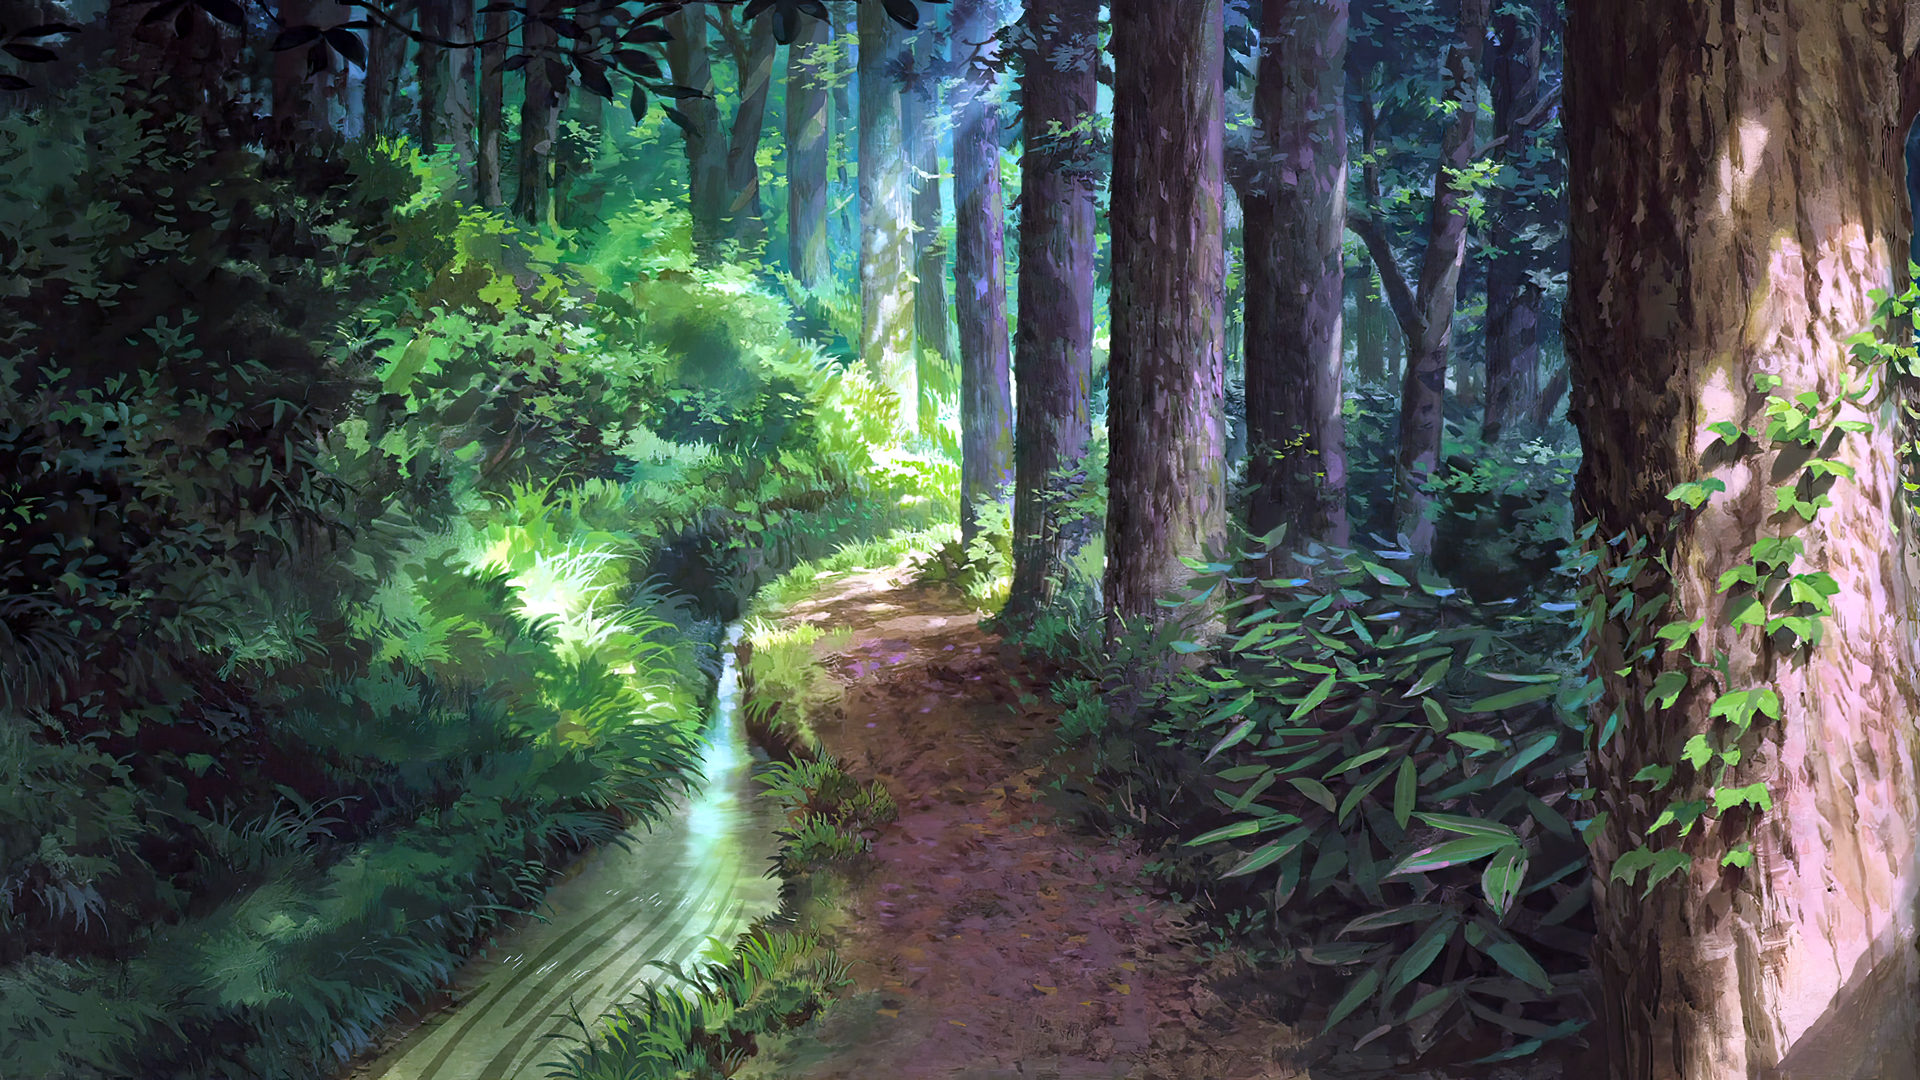 Anime 1920x1080 The Wind Rises animated movies film stills anime animation Studio Ghibli Hayao Miyazaki forest trees plants leaves nature